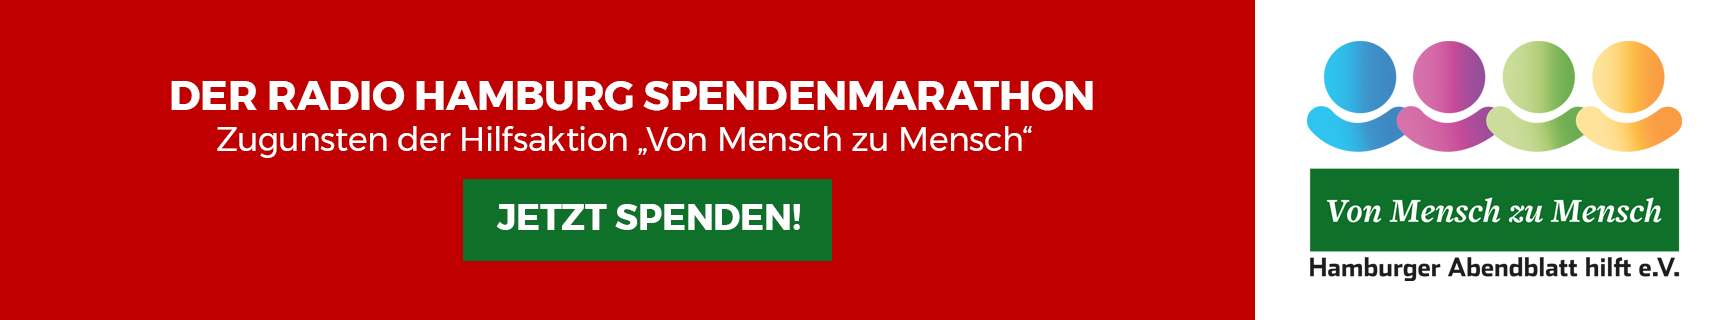 src=https://www.hoerer-helfen-kindern.de/wp-content/uploads/2020/04/Von-Mensch-zu-Mensch_Spendenbanner.jpg